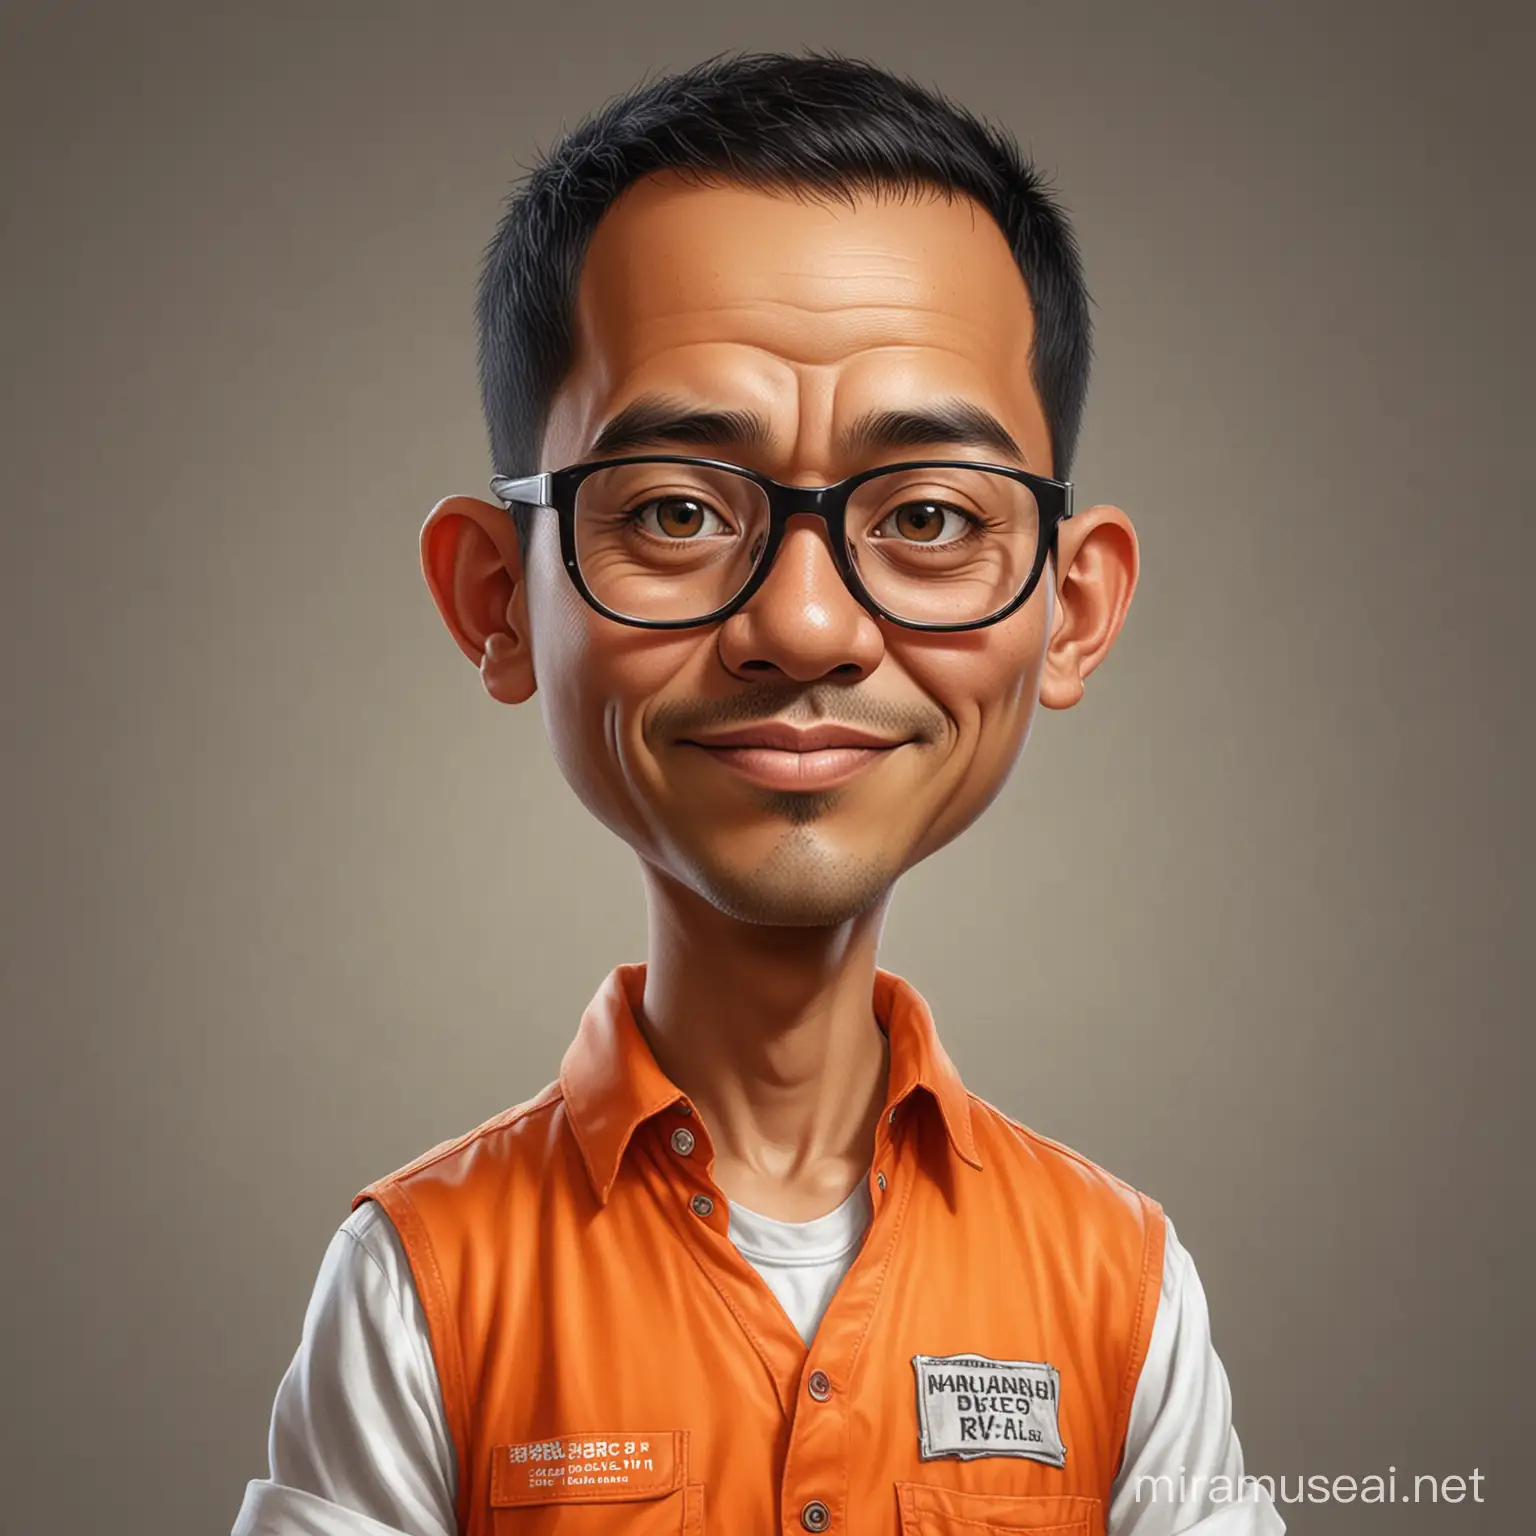 Indonesian Man Caricature Portrait in Orange Prison Uniform